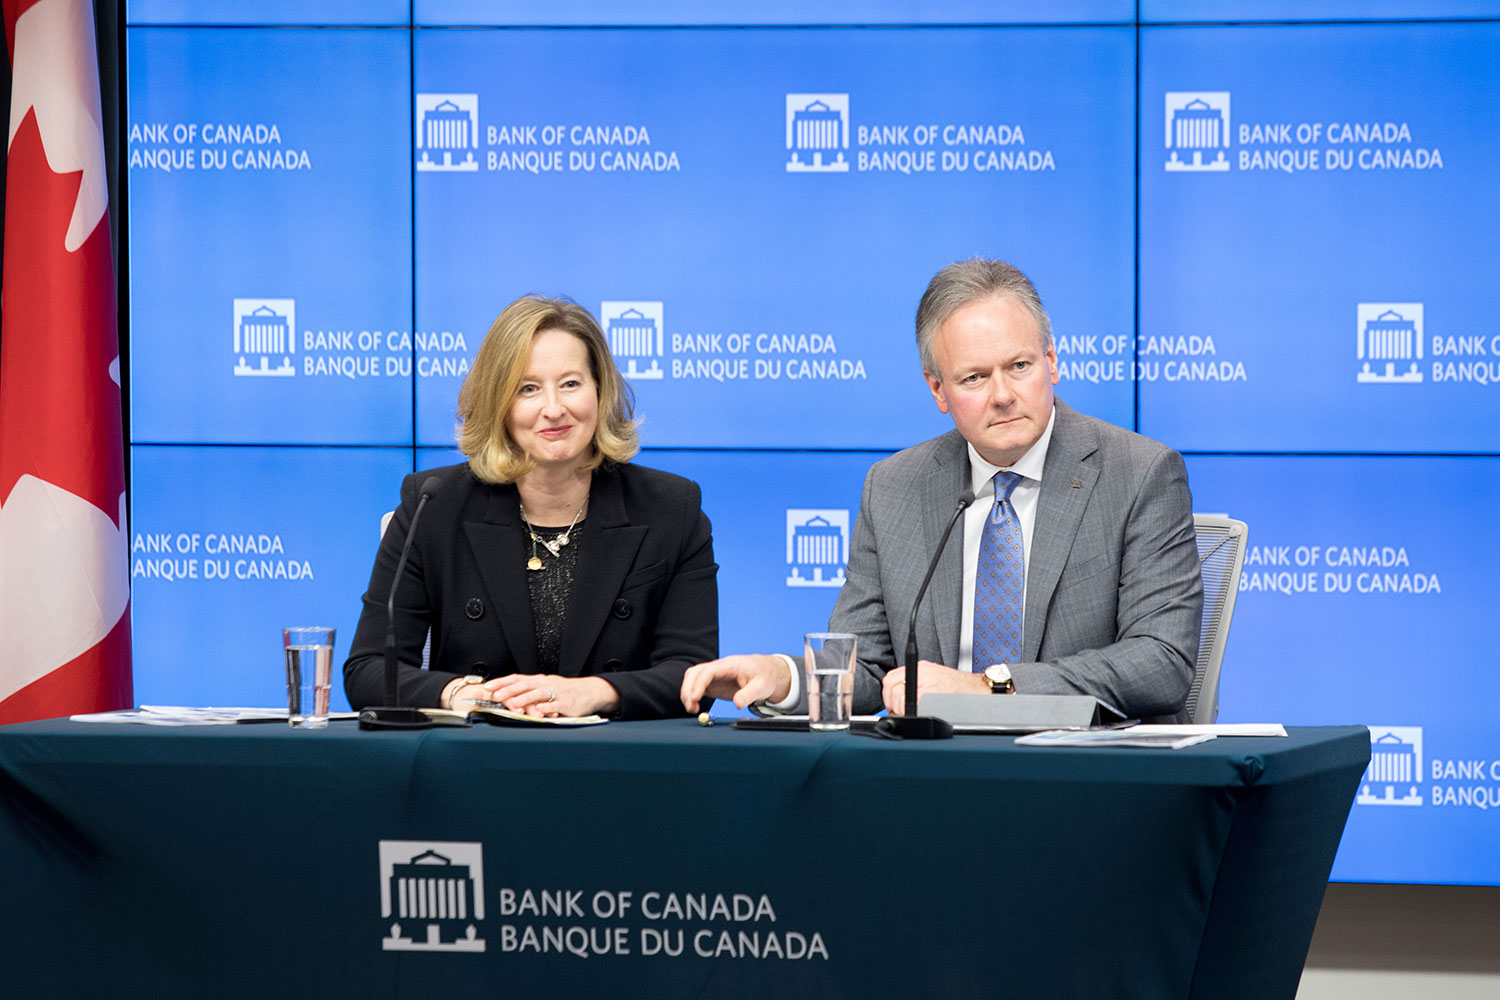 Bank of Canada senior deputy governor Carolyn Wilkins and governor Stephen Poloz.
Courtesy Bank of Canada